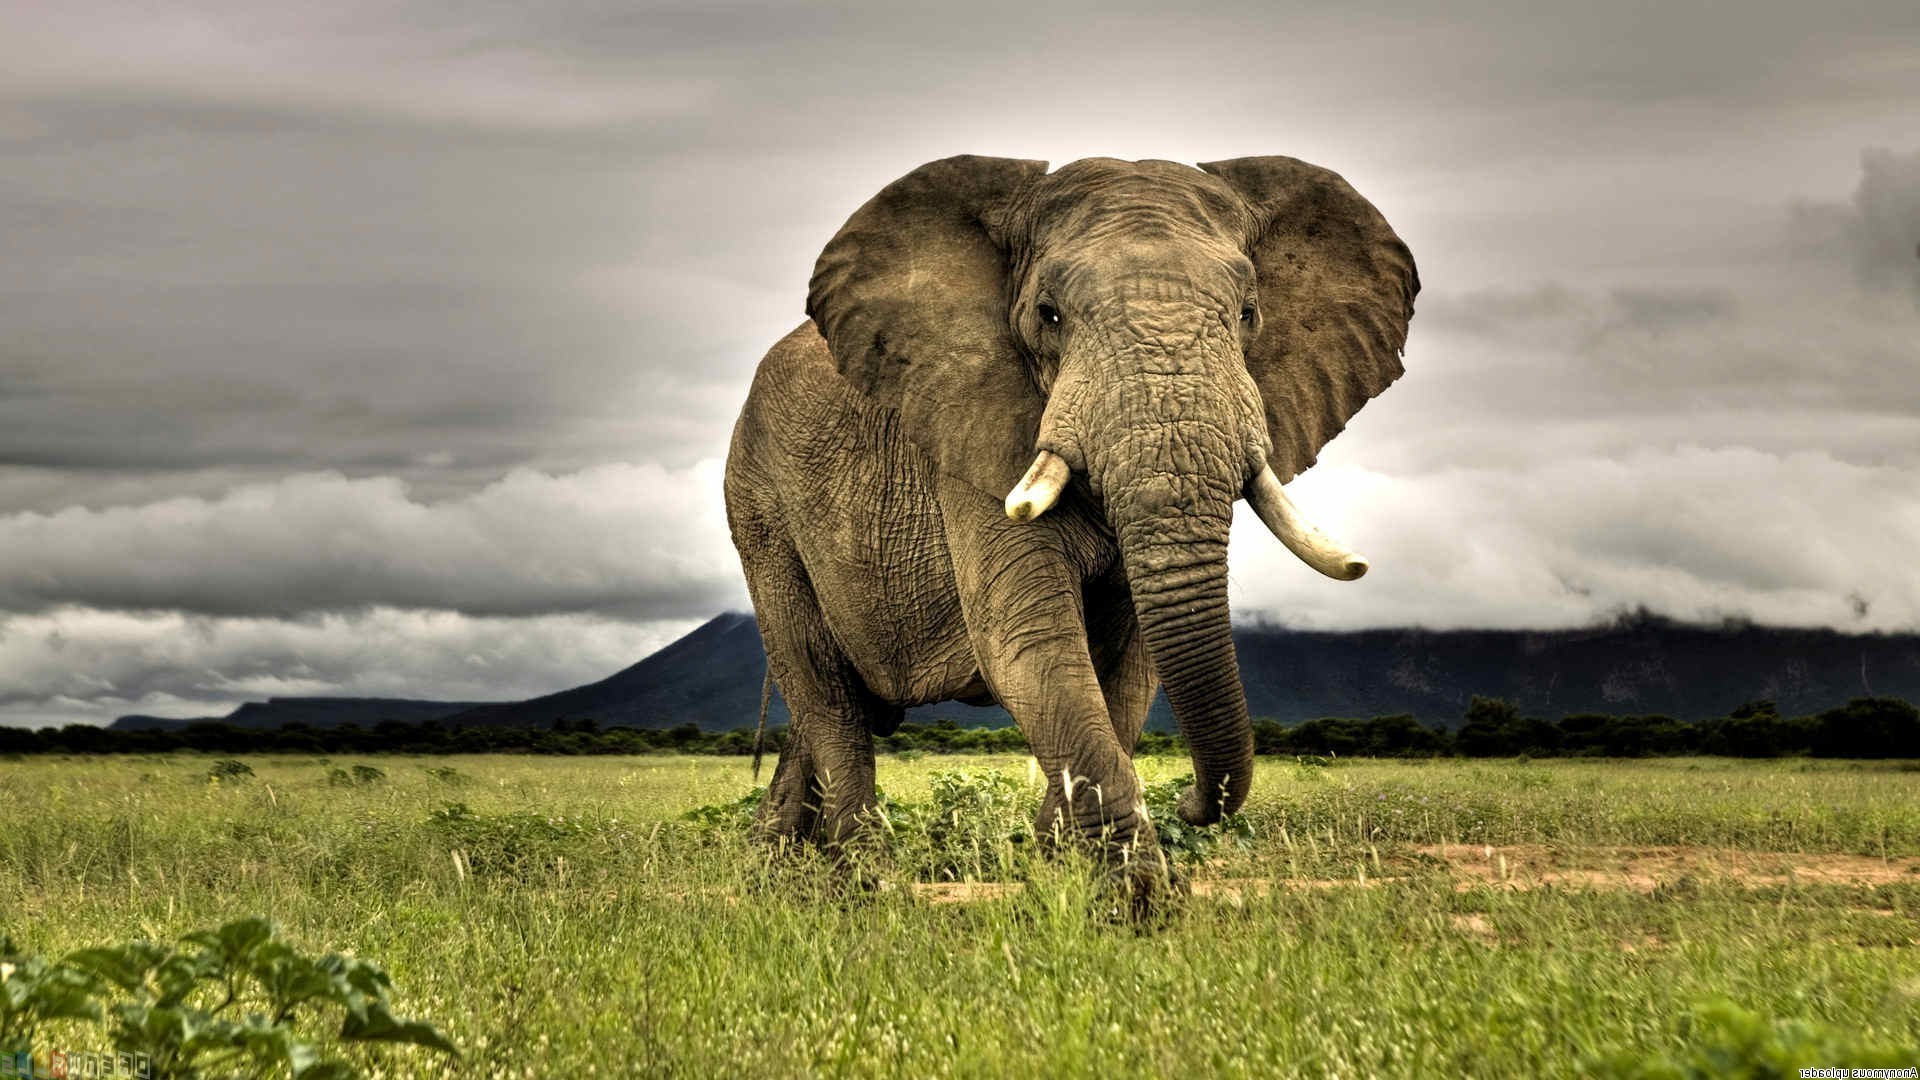 elephant wallpaper,elephant,elephants and mammoths,terrestrial animal,grassland,wildlife